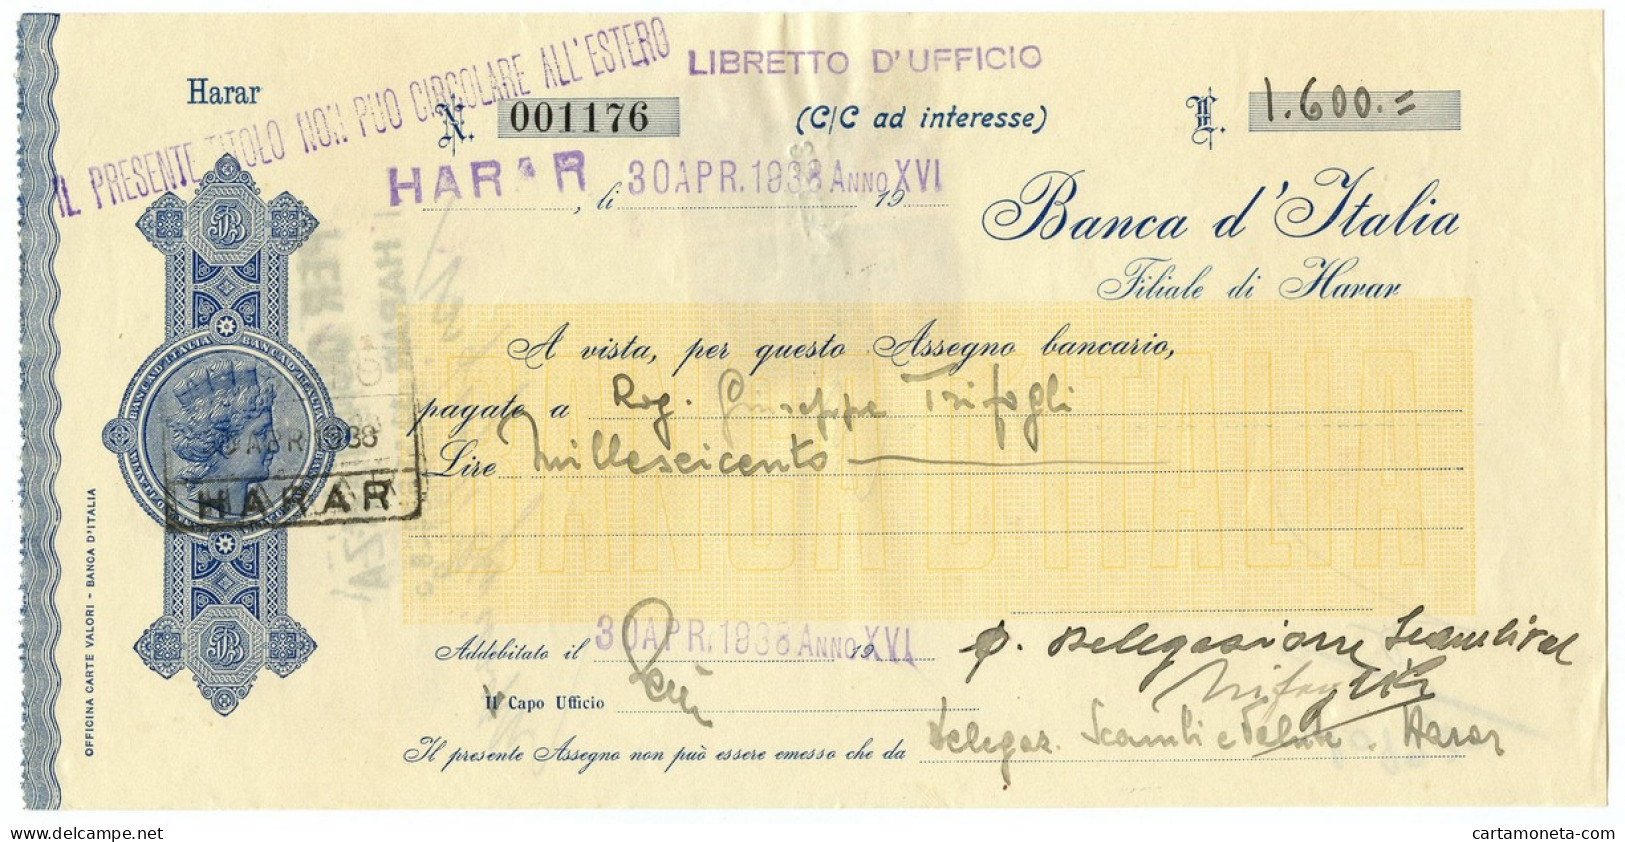 1600 LIRE ASSEGNO C/C AD INTERESSE BANCA D'ITALIA FILIALE HARAR 30/04/1938 SUP - Africa Oriental Italiana